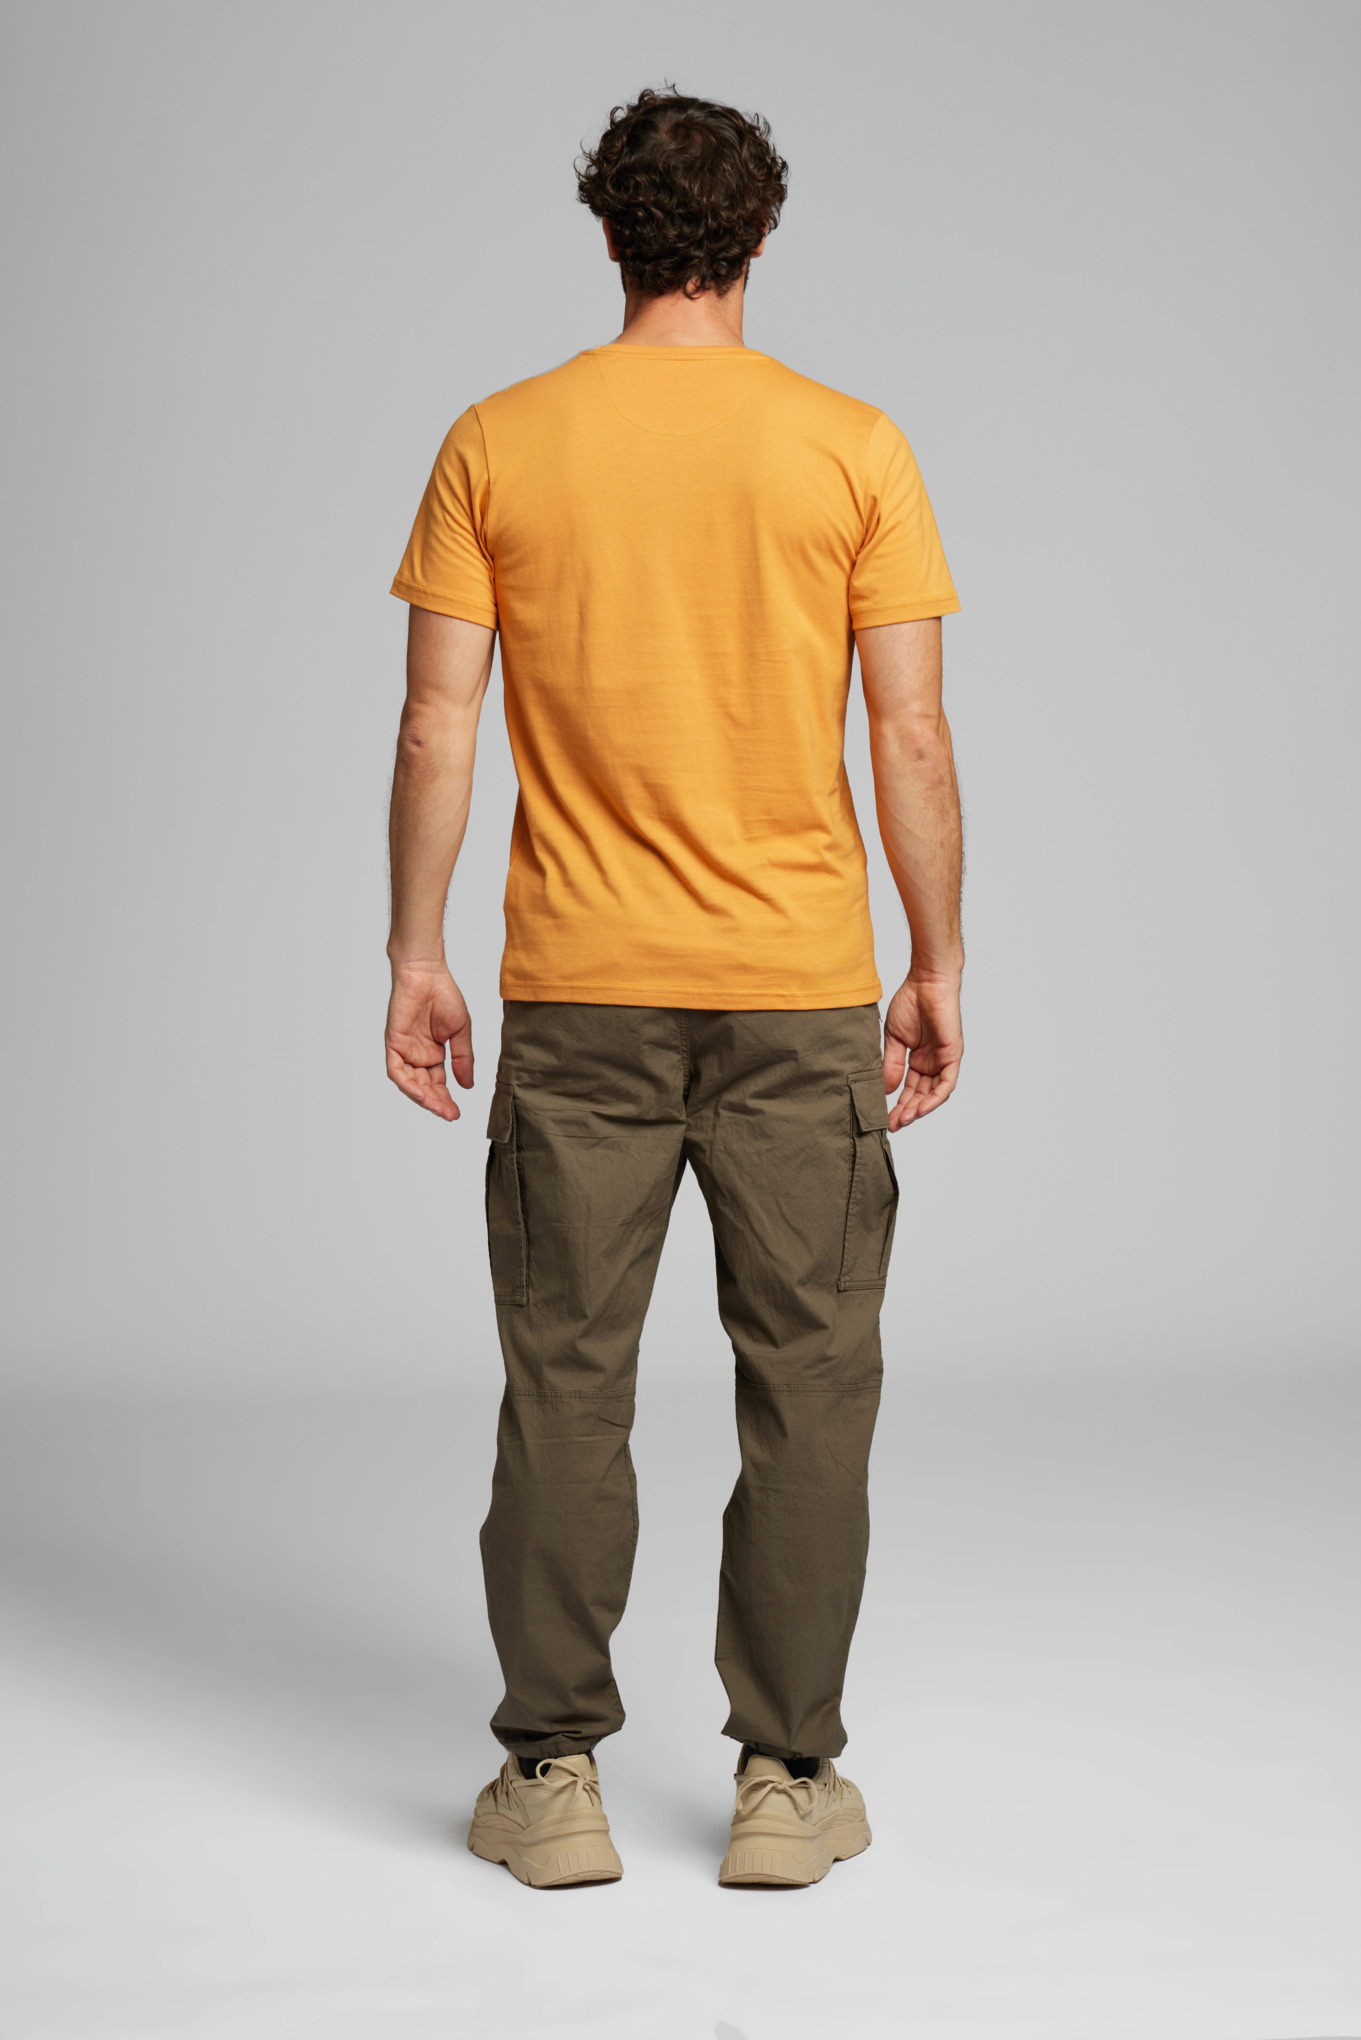 Tričko SUSTAINABLE LOGO oranžové